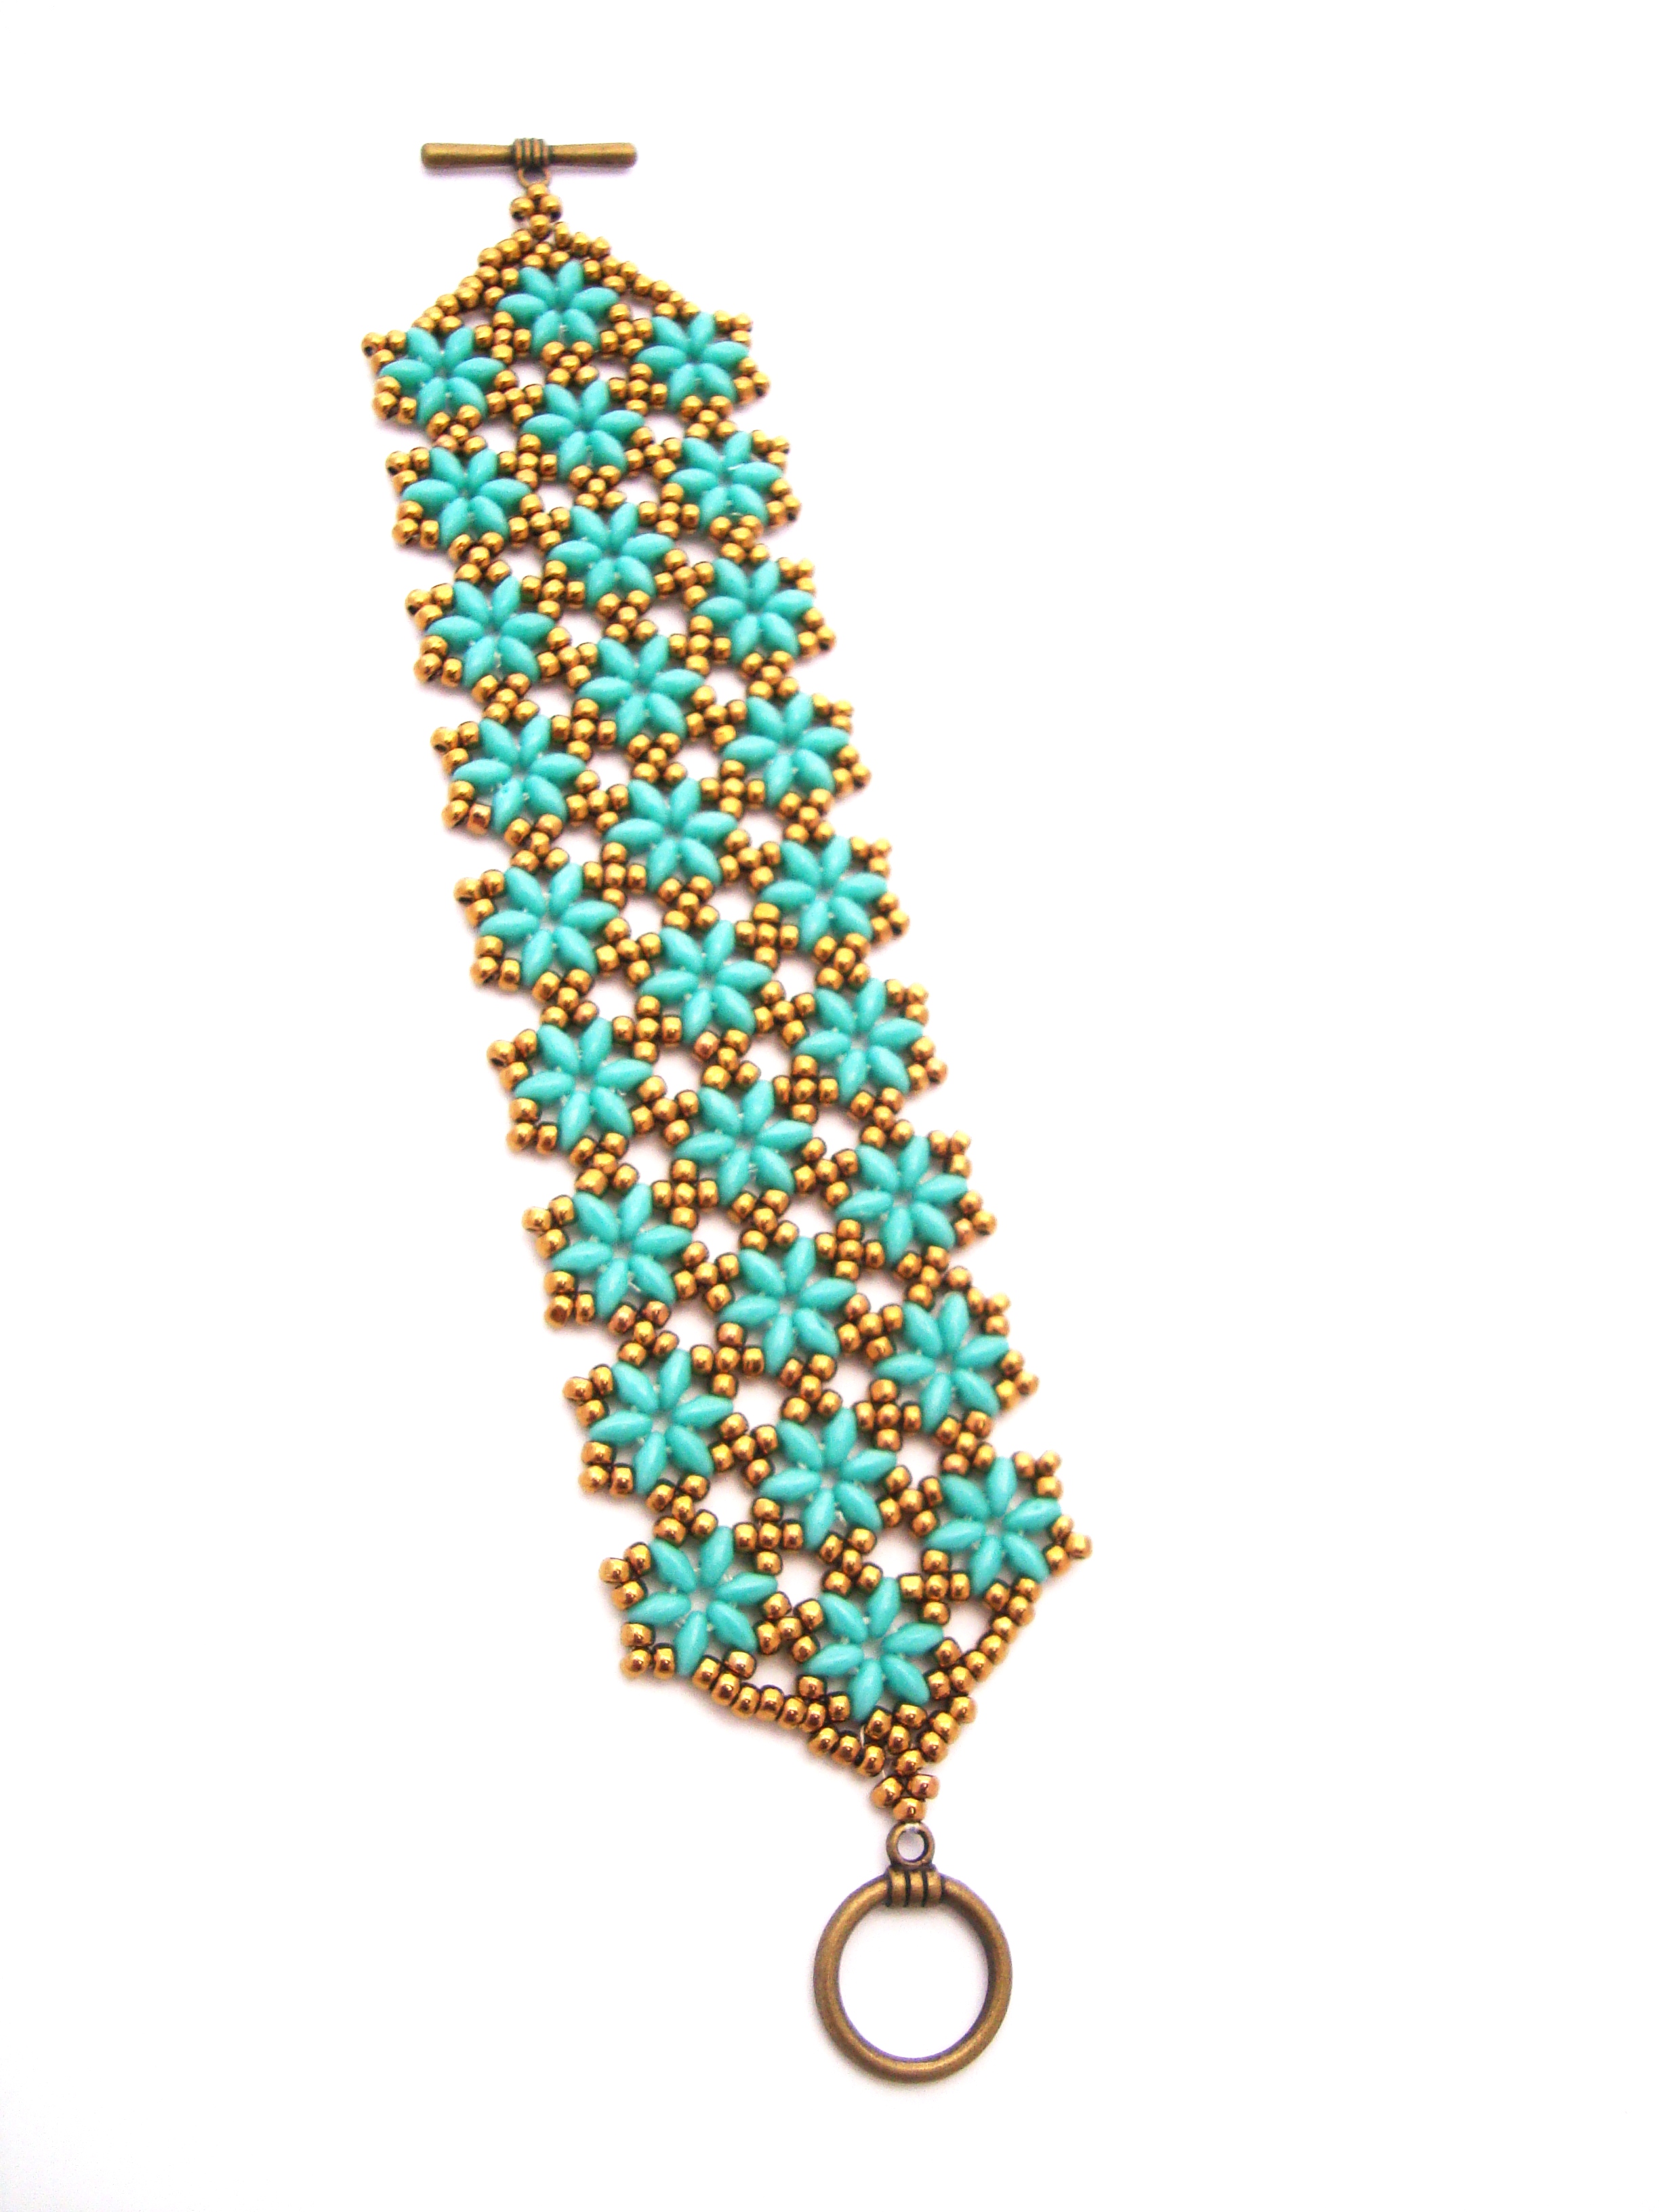 Turquoise Beads in Bloom Bracelet